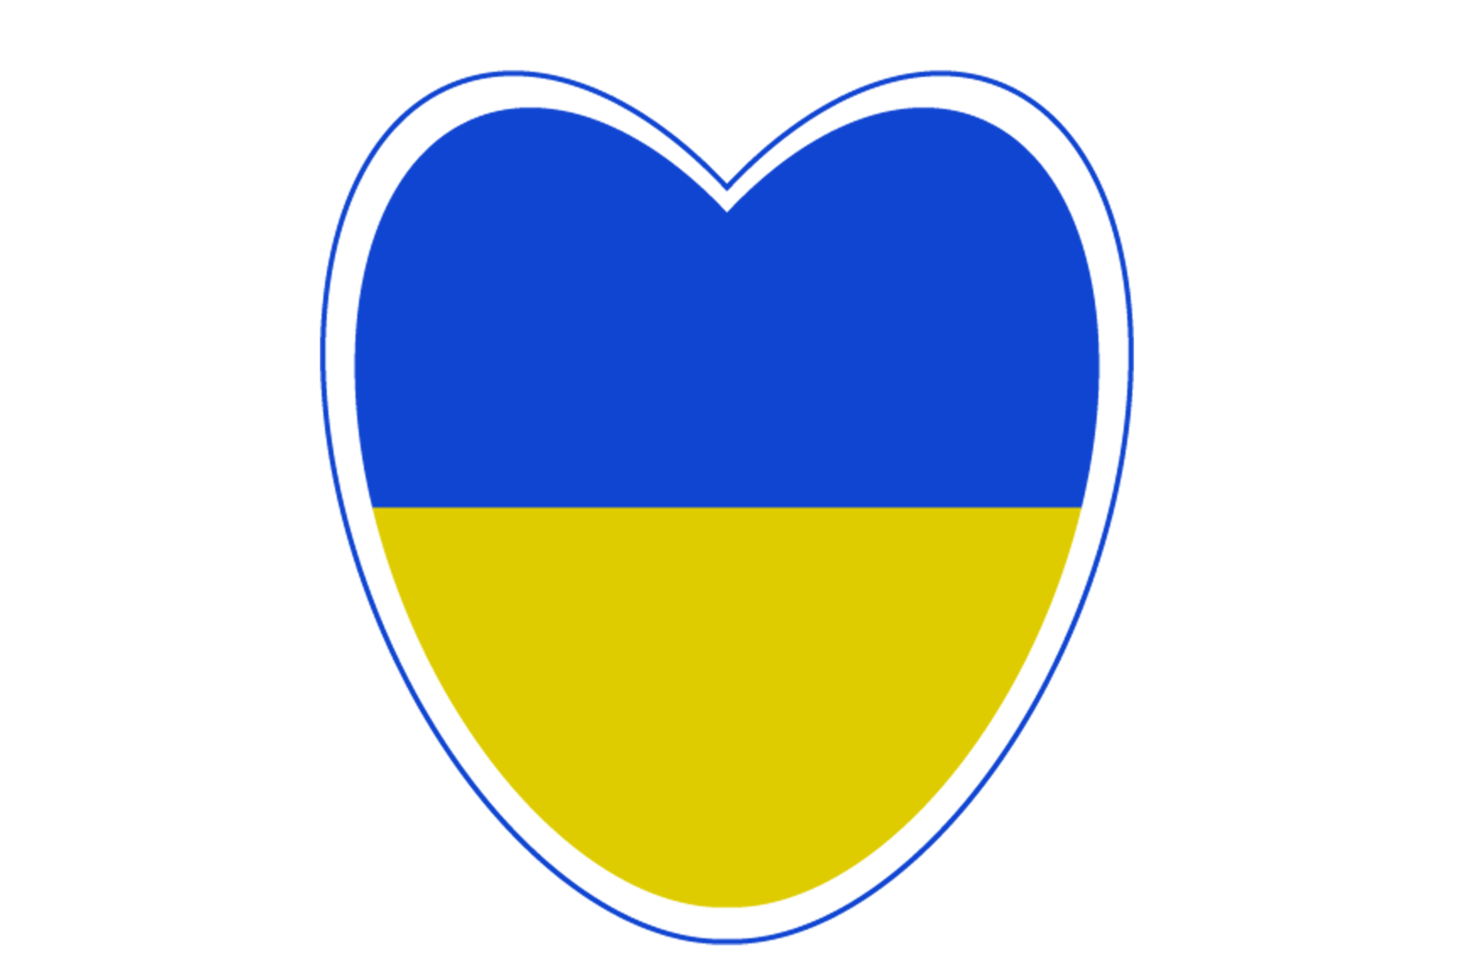 Ukraine flag. Support Ukraine sign. Sticker with colors of Ukrainian flag. War in Ukraine concept. PNG illustration